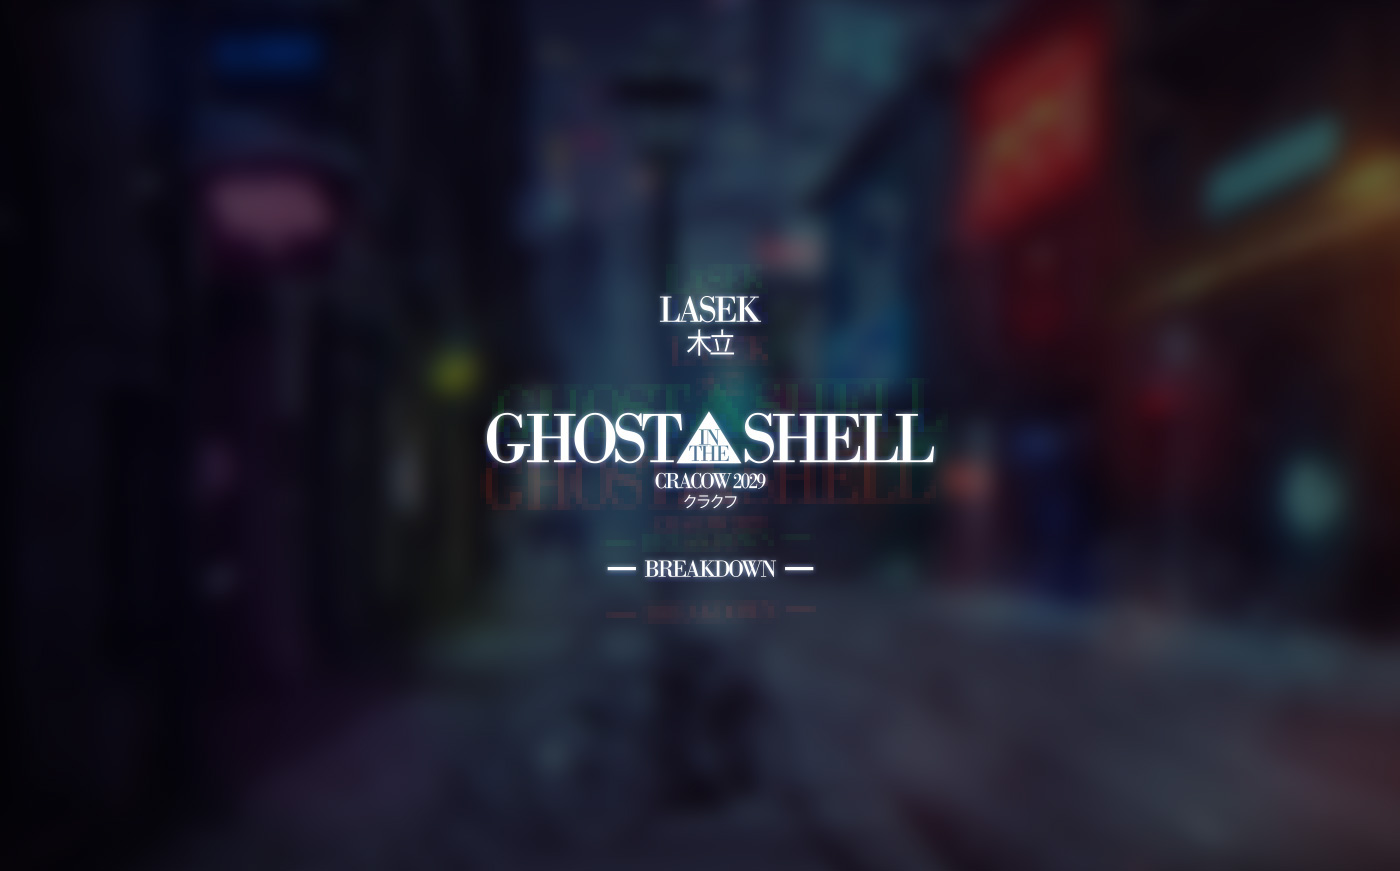 concept krakow cracow Cyberpunk ghost shell Lasek